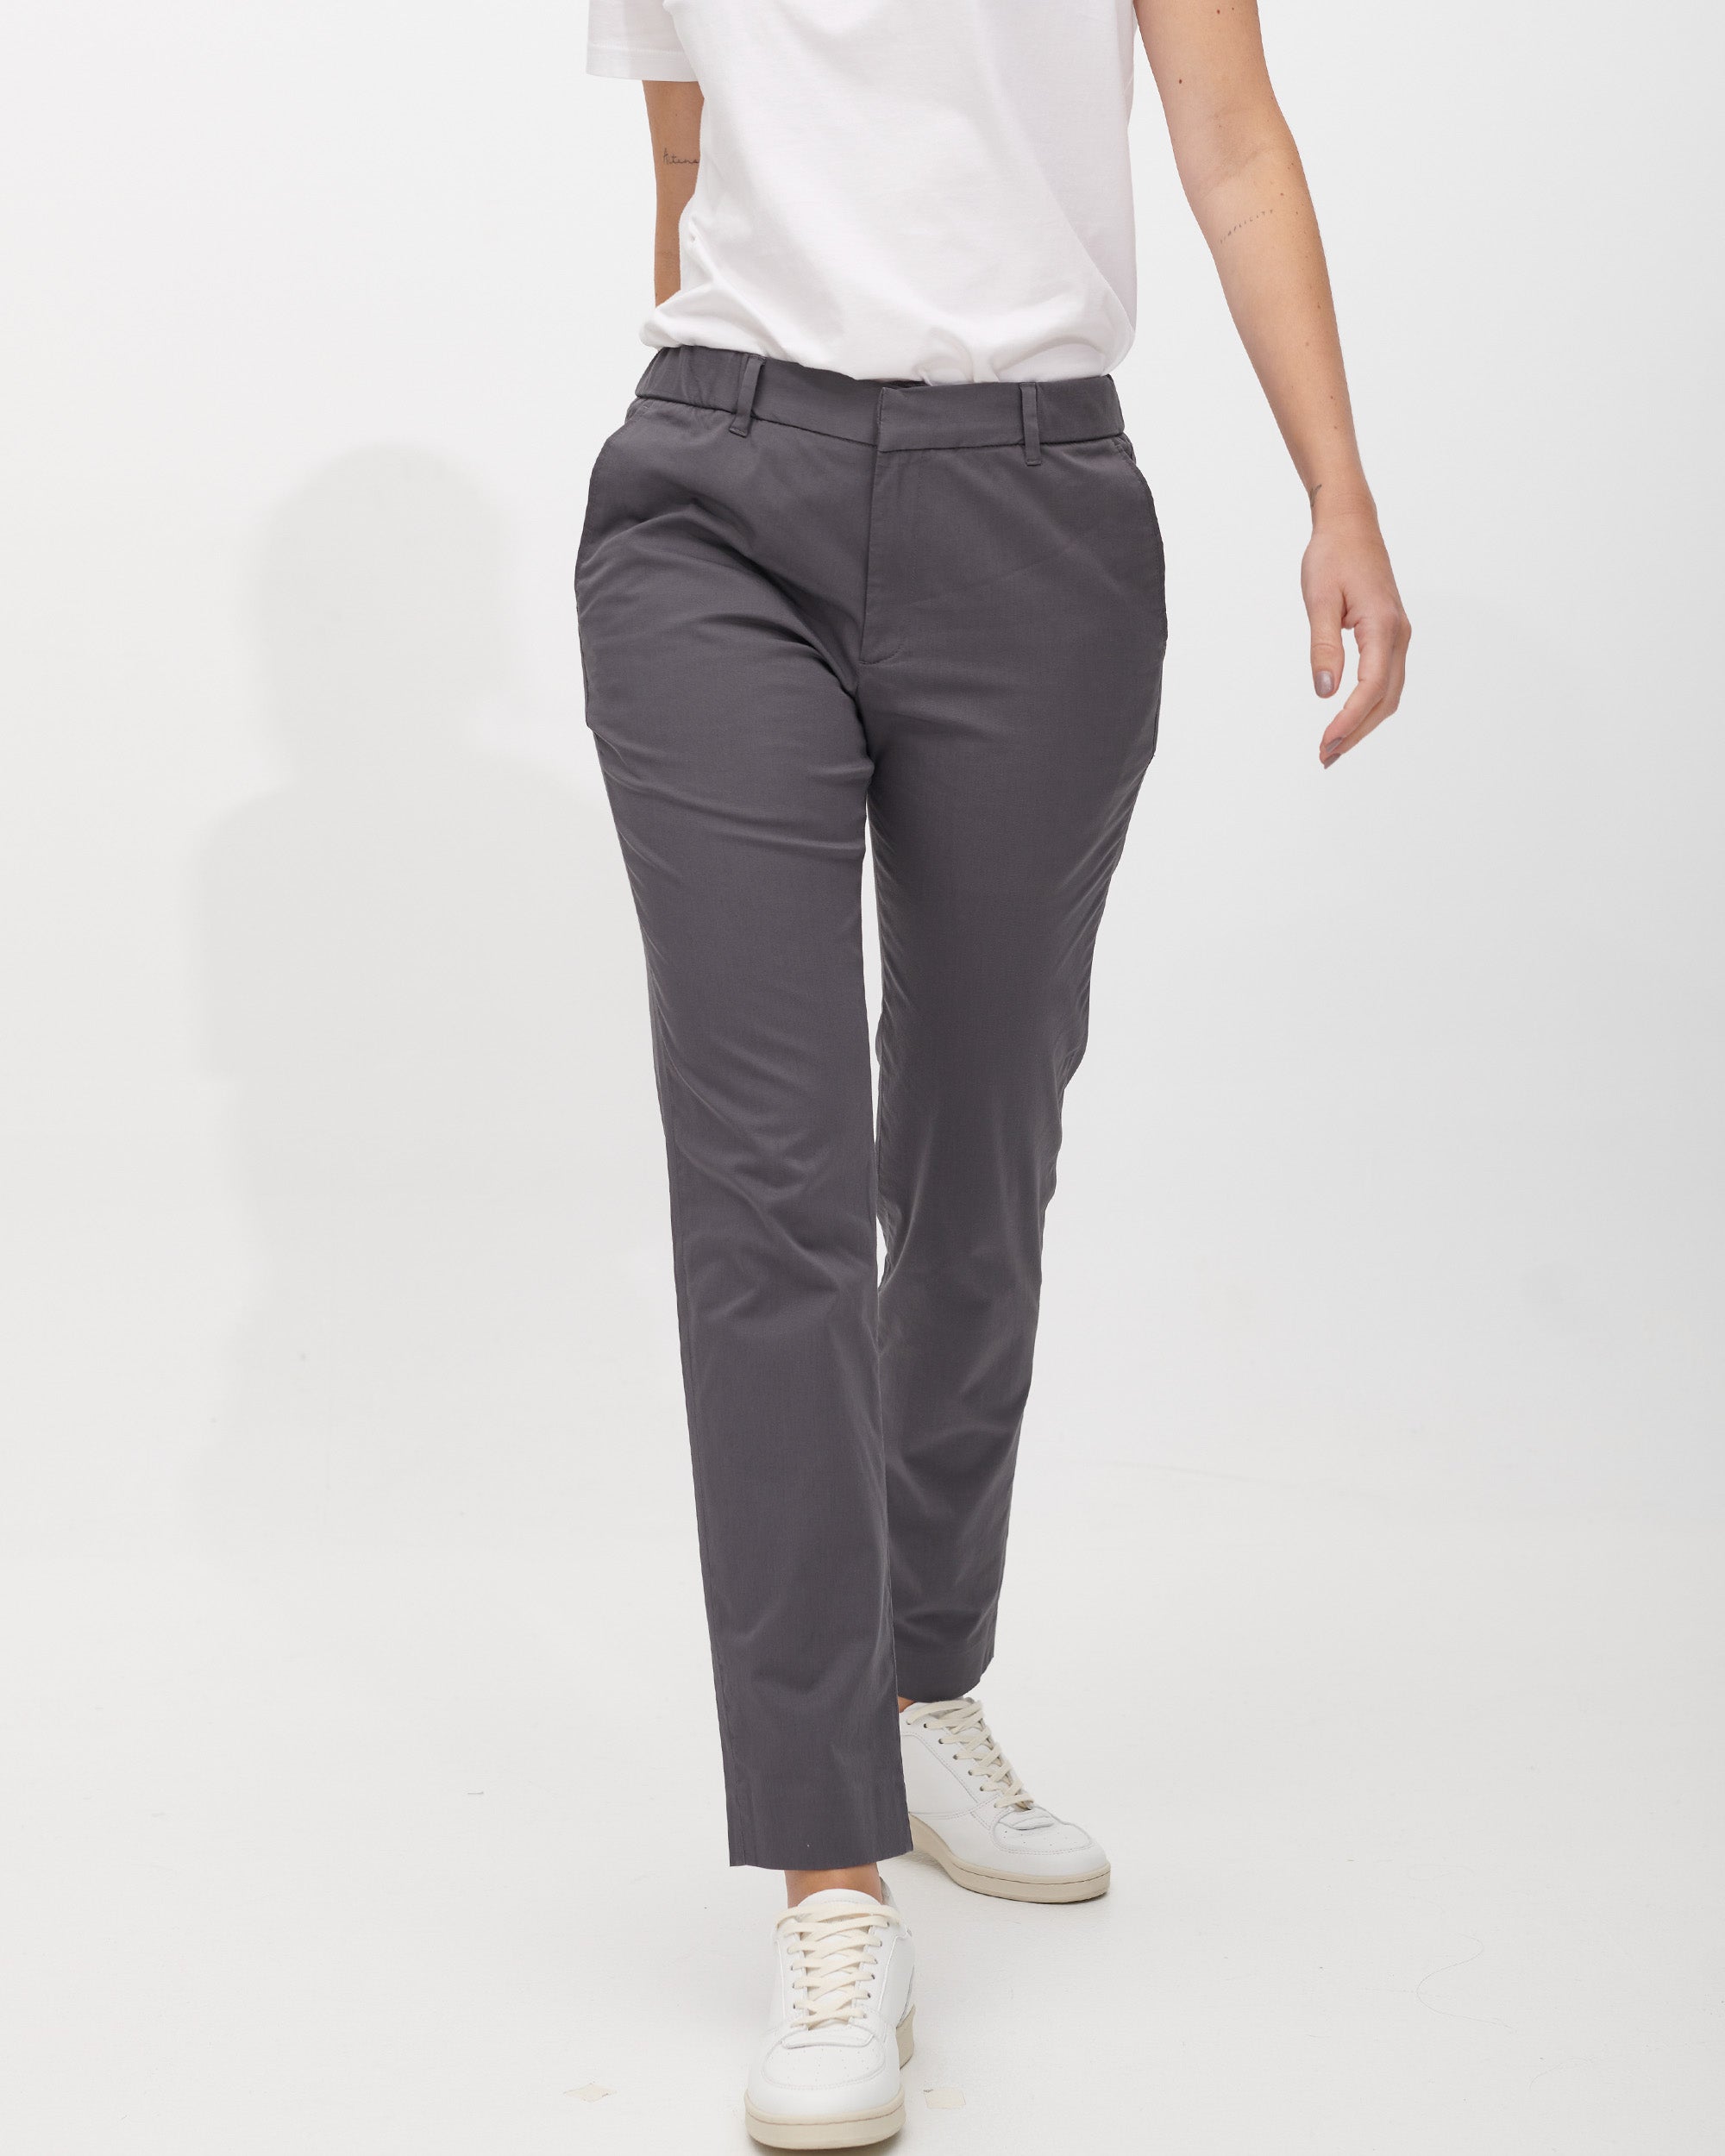 The Boyfriend Chino in Grey | Stretch Cotton Chino Trouser for Women